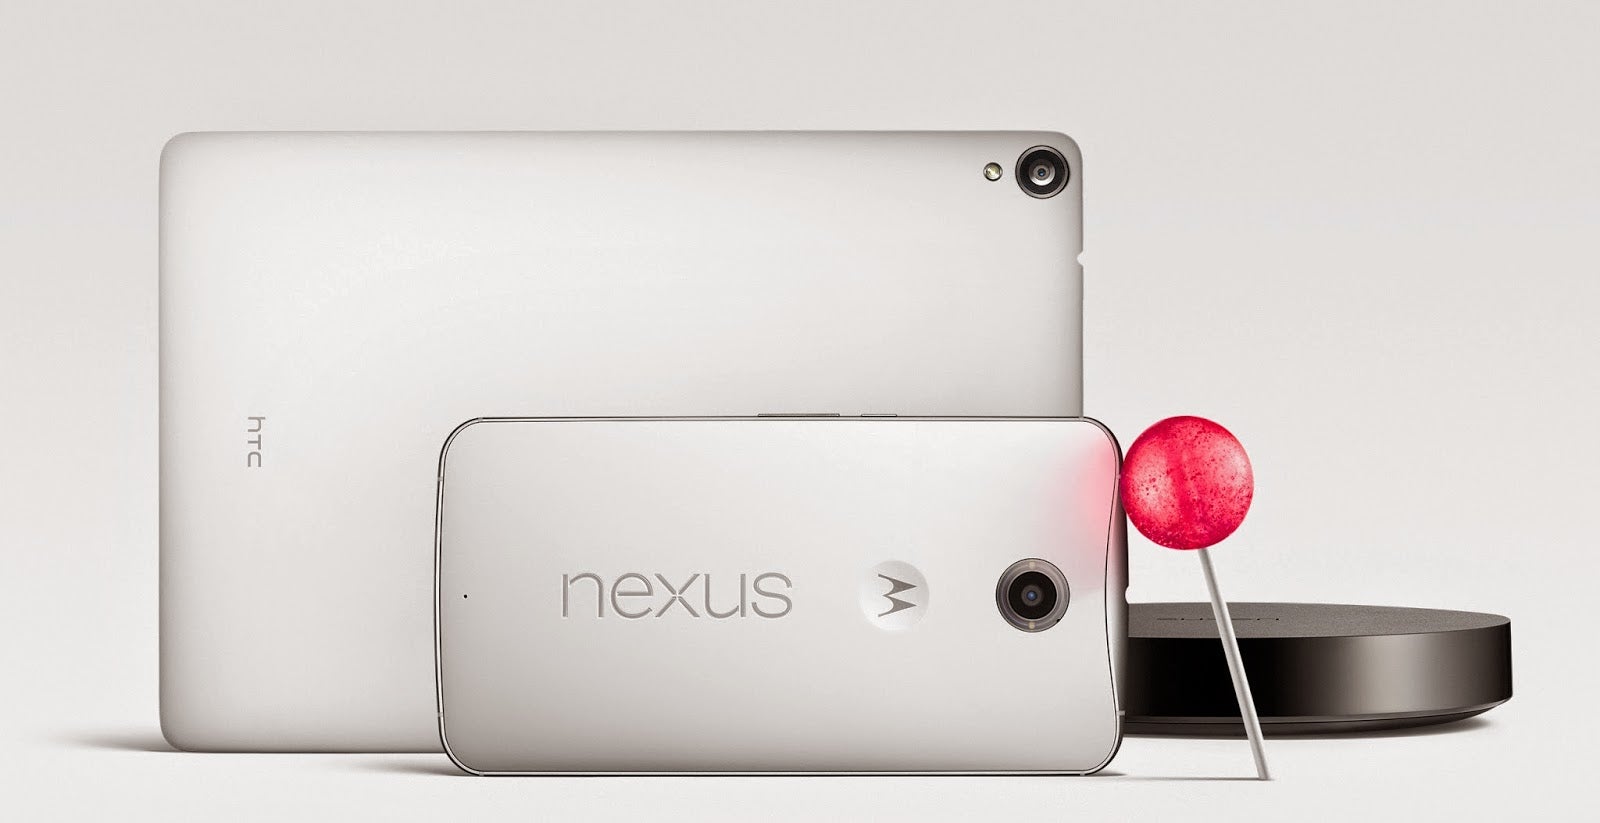 The new, 2014 Nexus family - 2014 Nexus 6, Nexus 9, Nexus Player, and Android 5.0 Lollipop: all you need to know